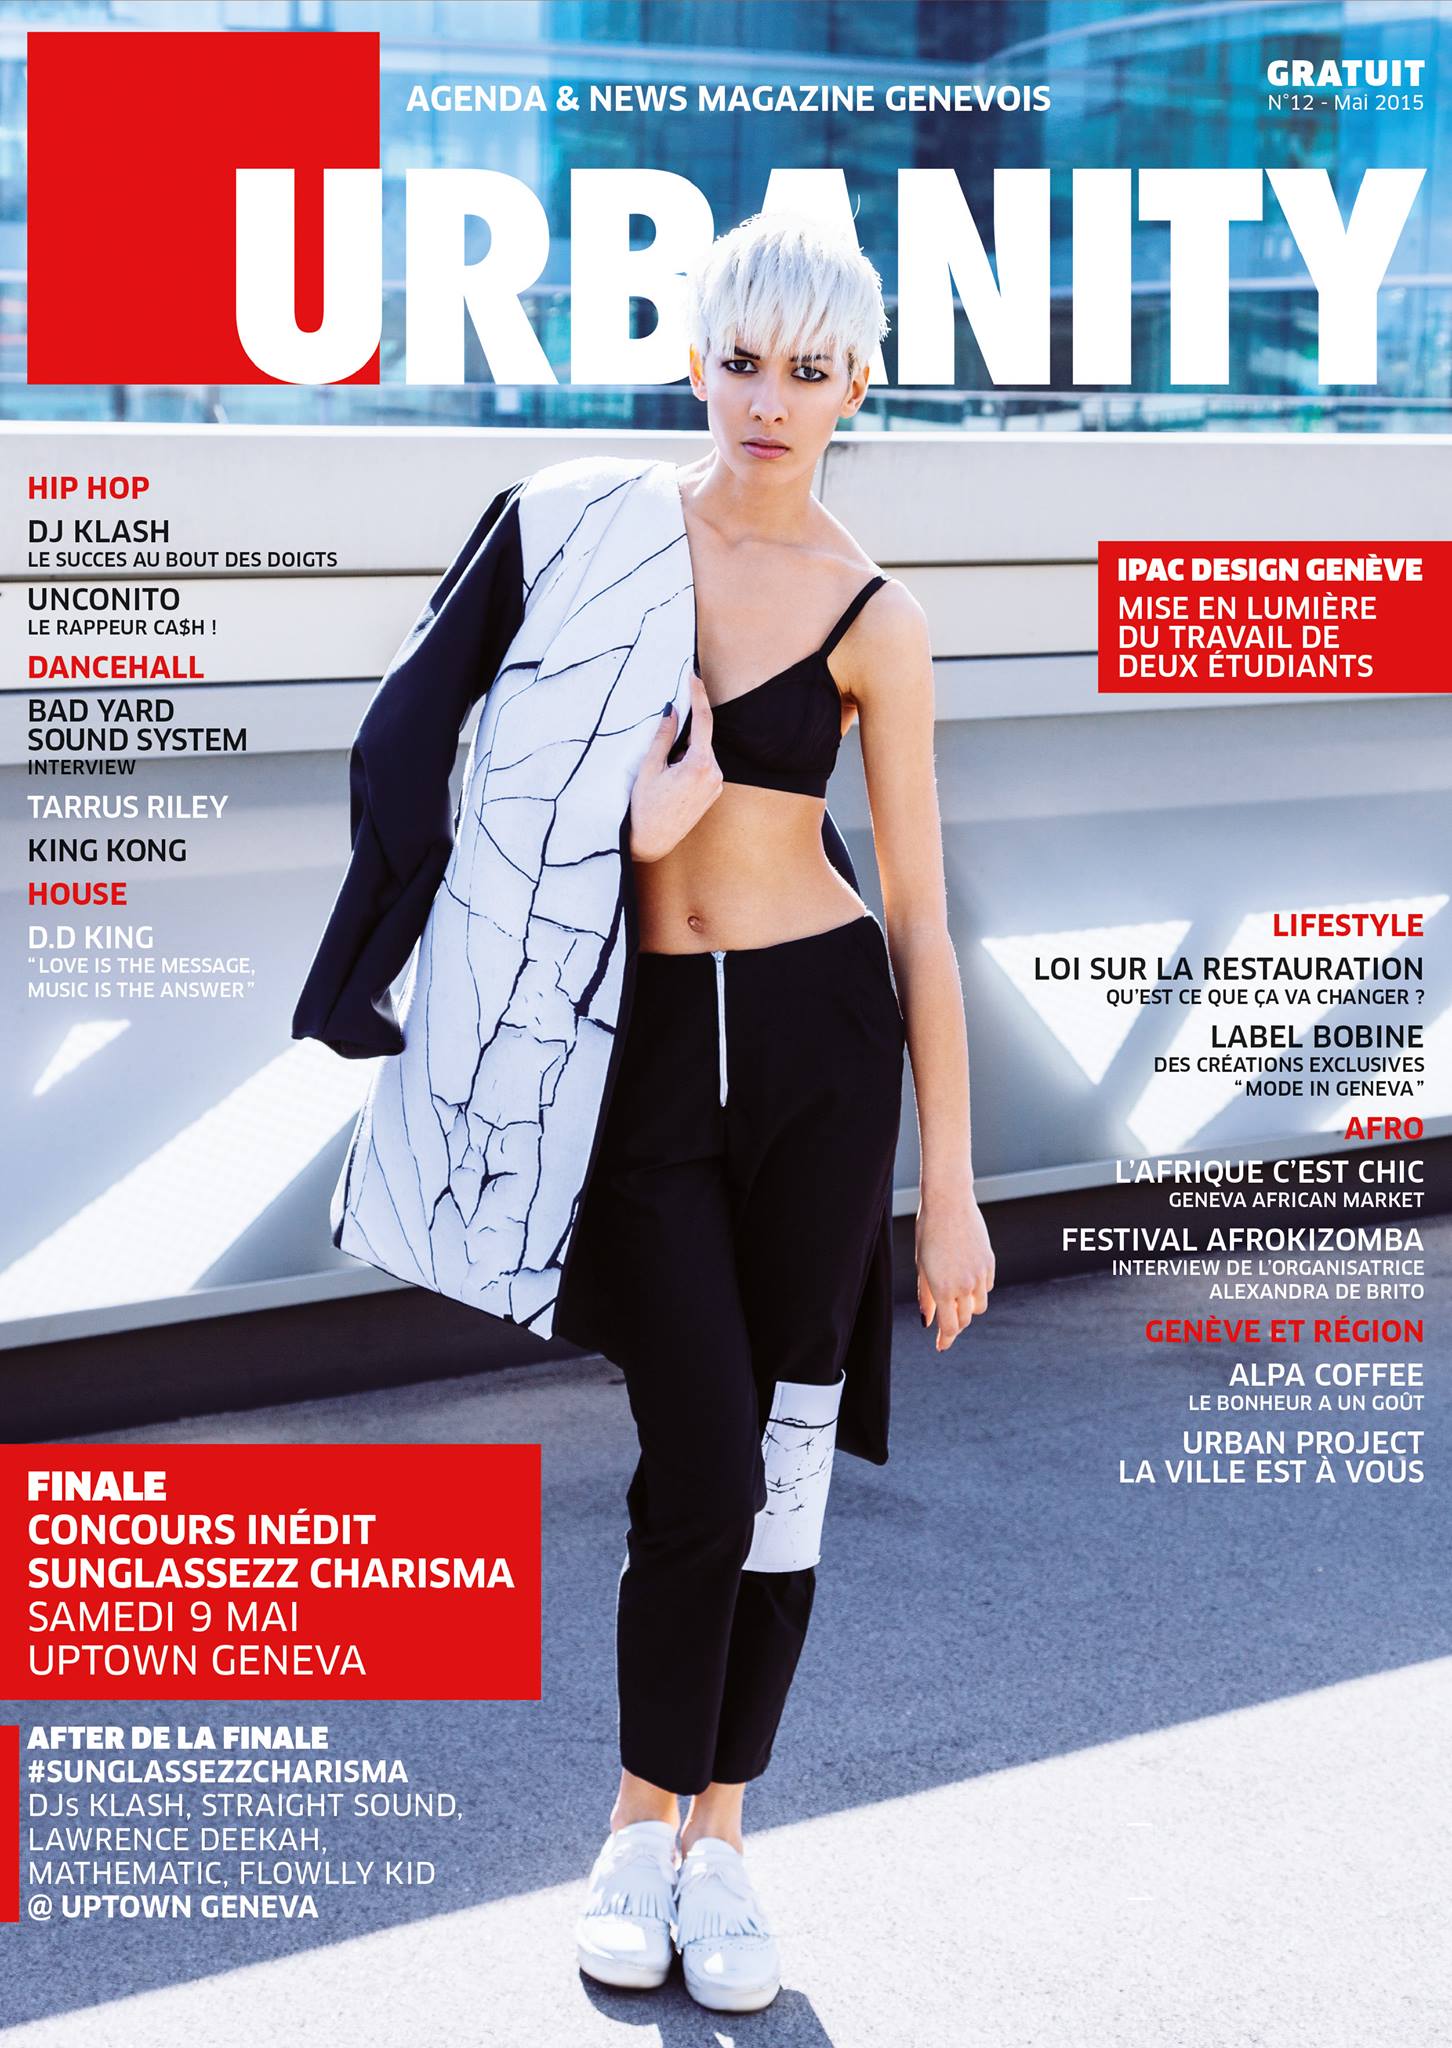 thepurpleside-graphiste-freelance-geneve-urbanity-magazine-cover-ipac-design-geneve